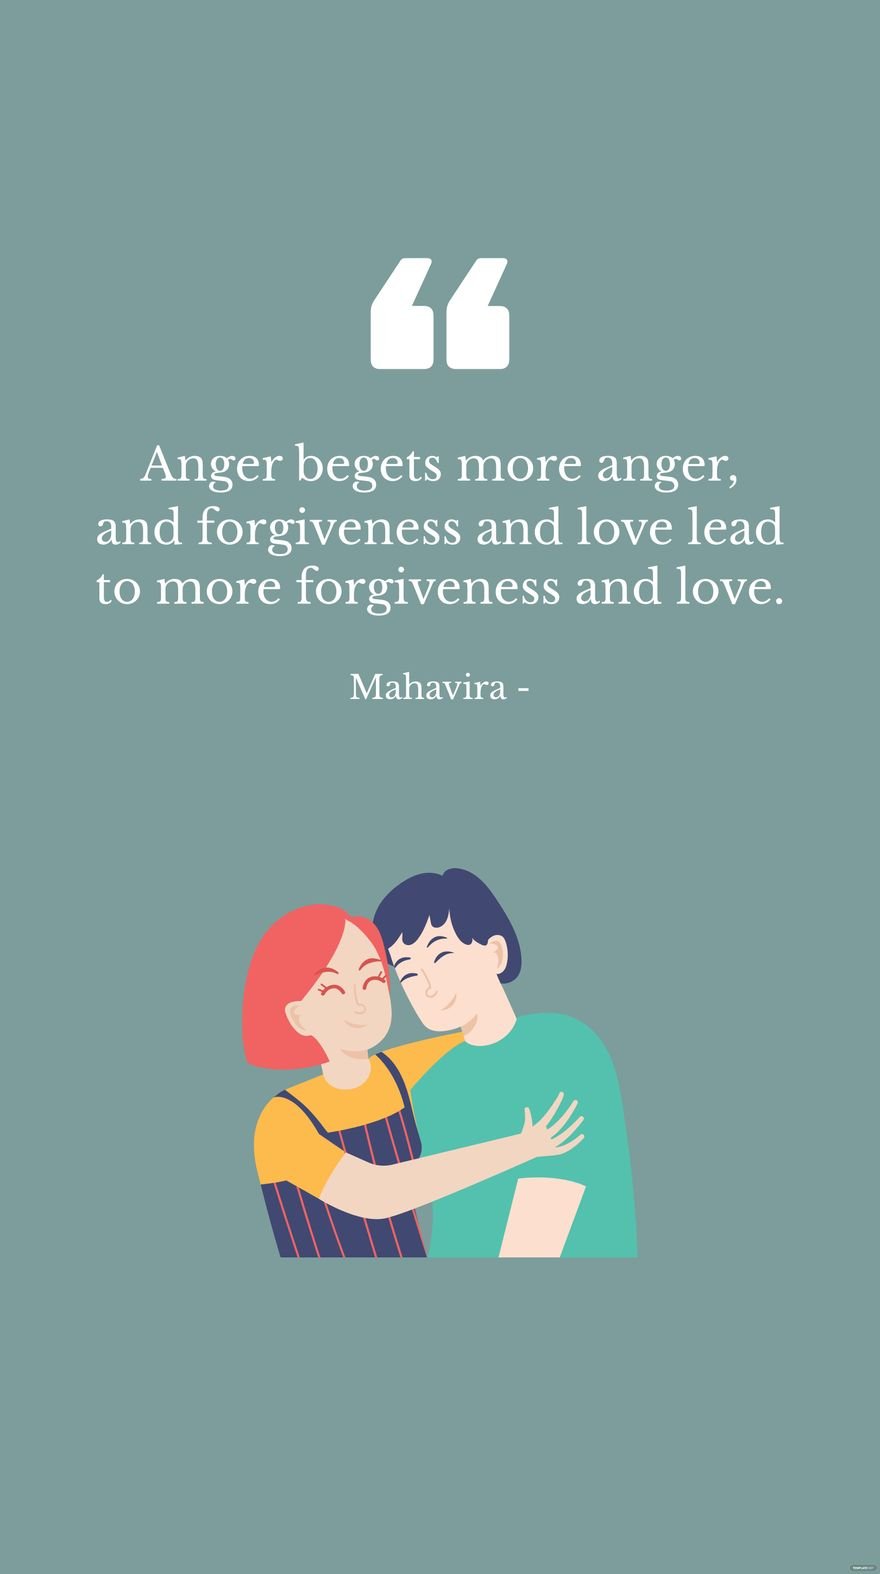 Mahavira - Anger begets more anger, and forgiveness and love lead to more forgiveness and love. in JPG